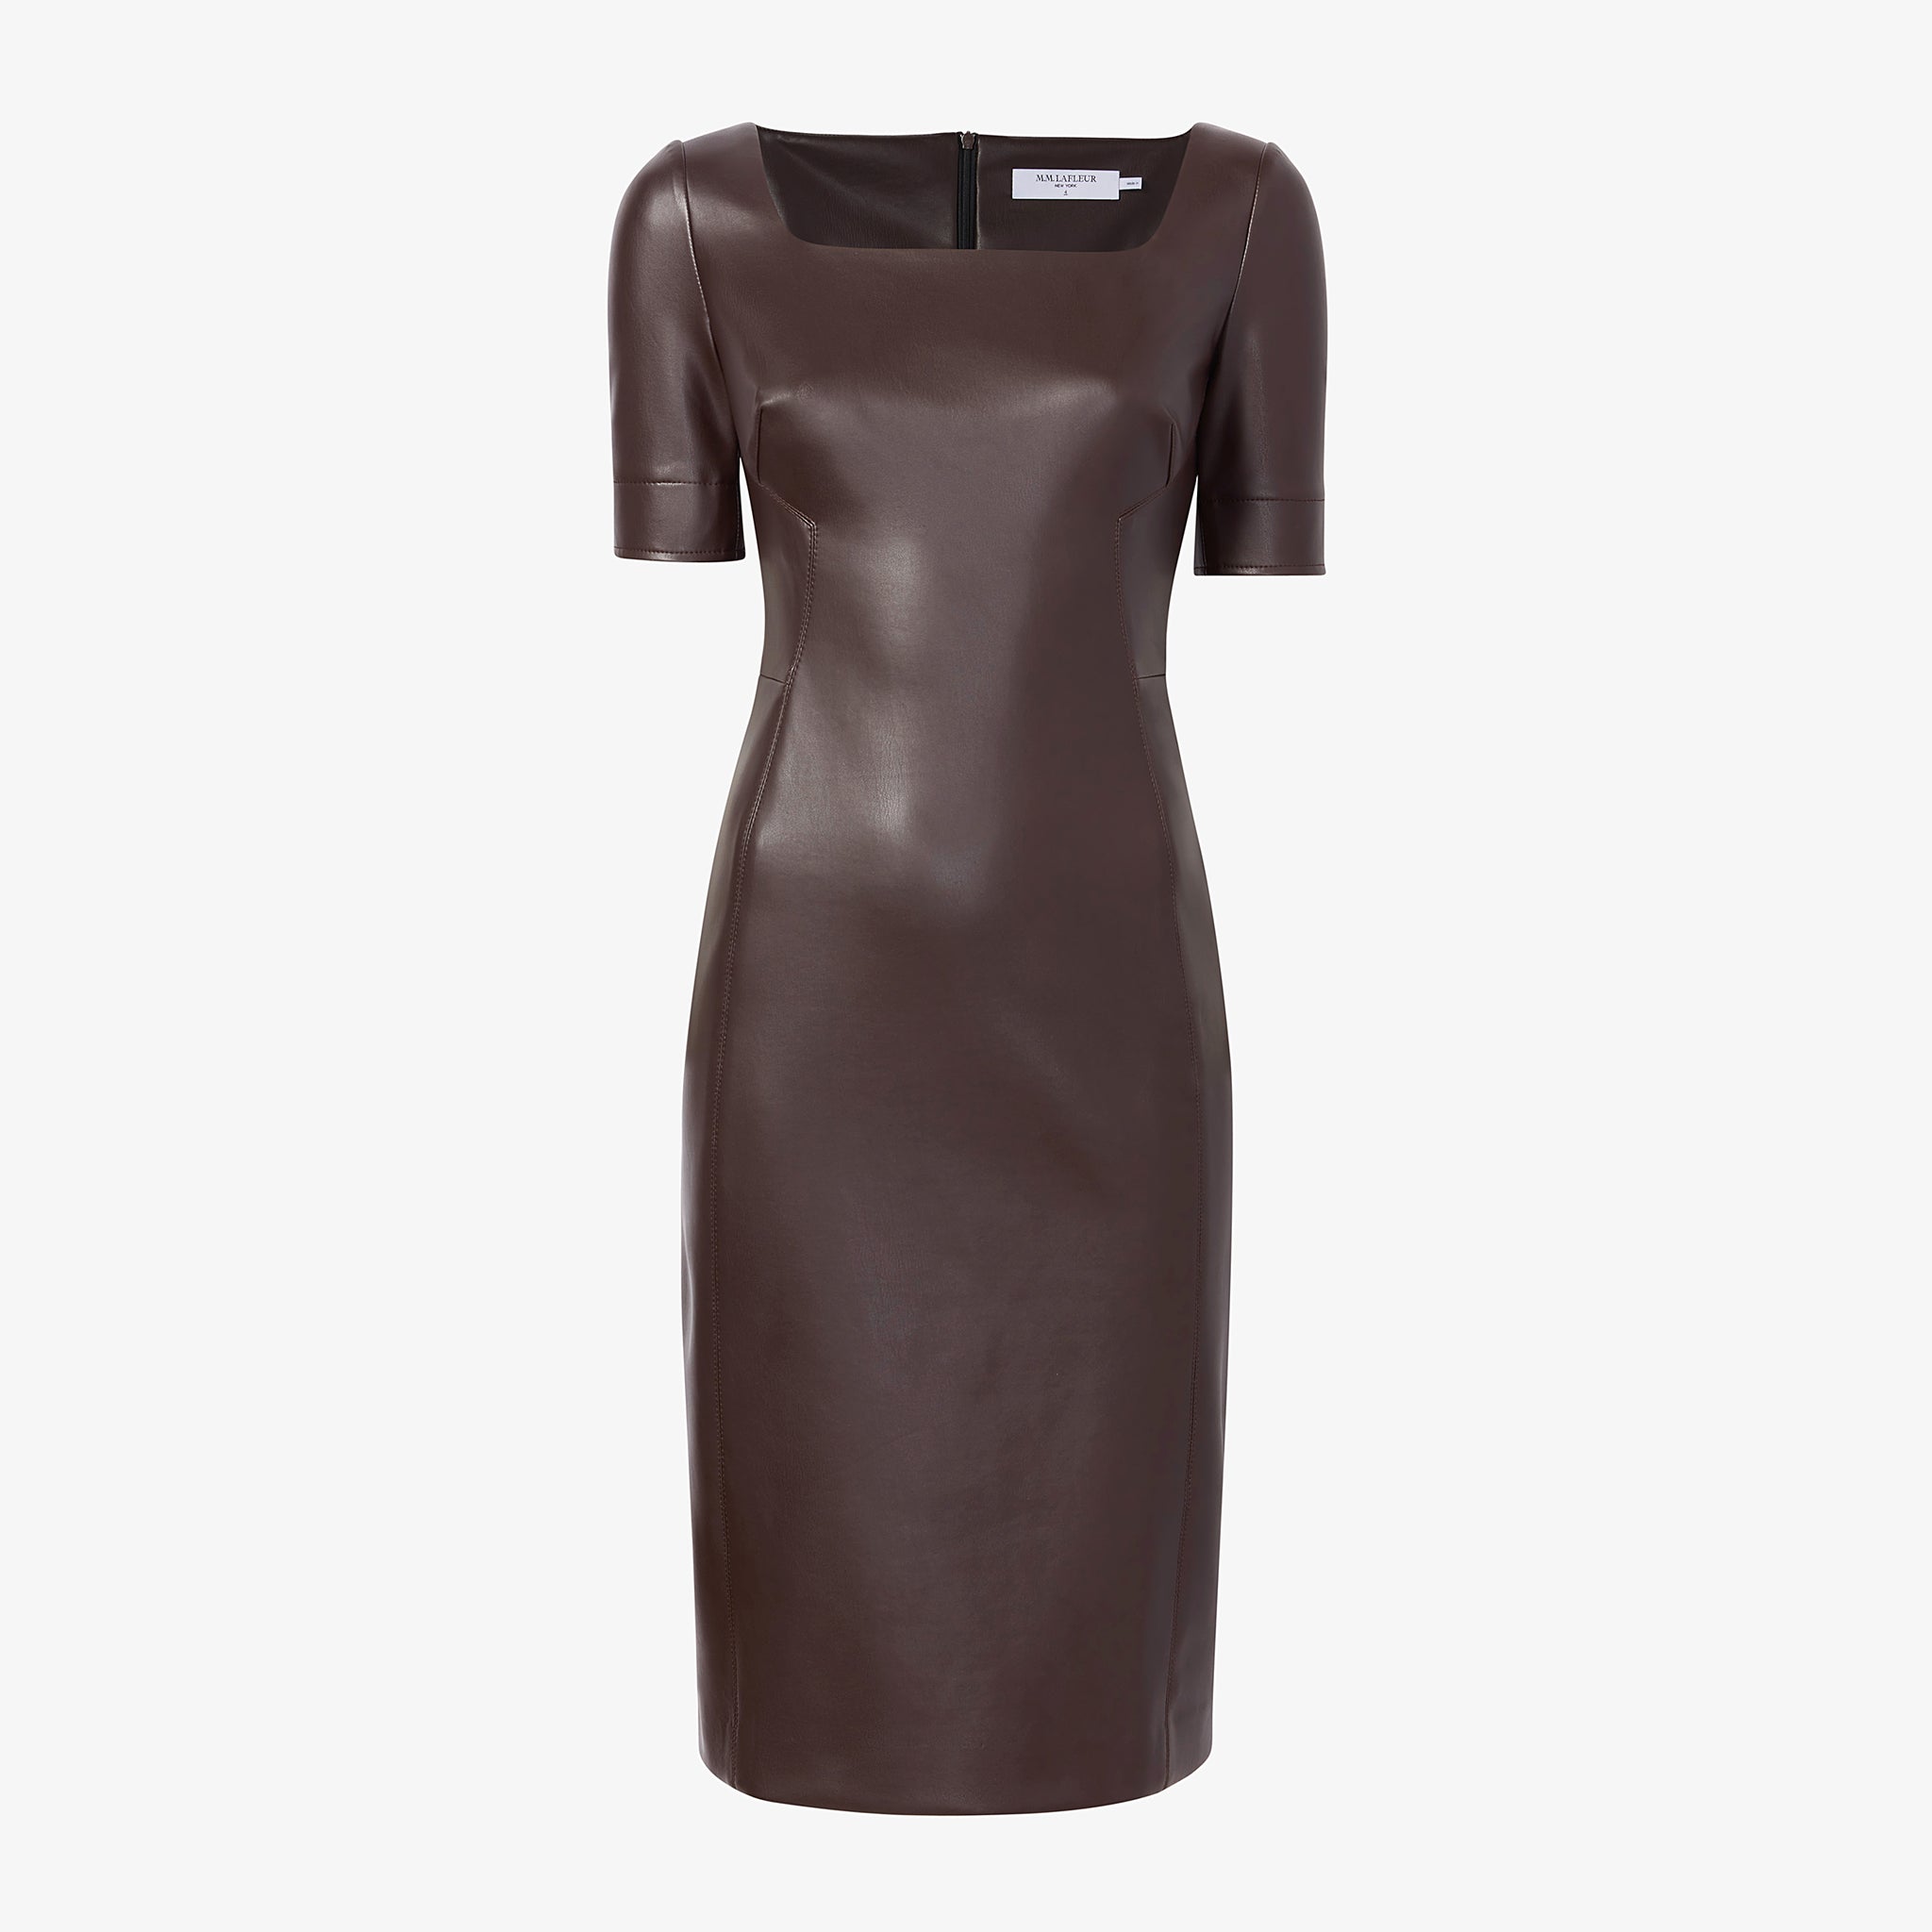 Packshot image of the noa dress in brown